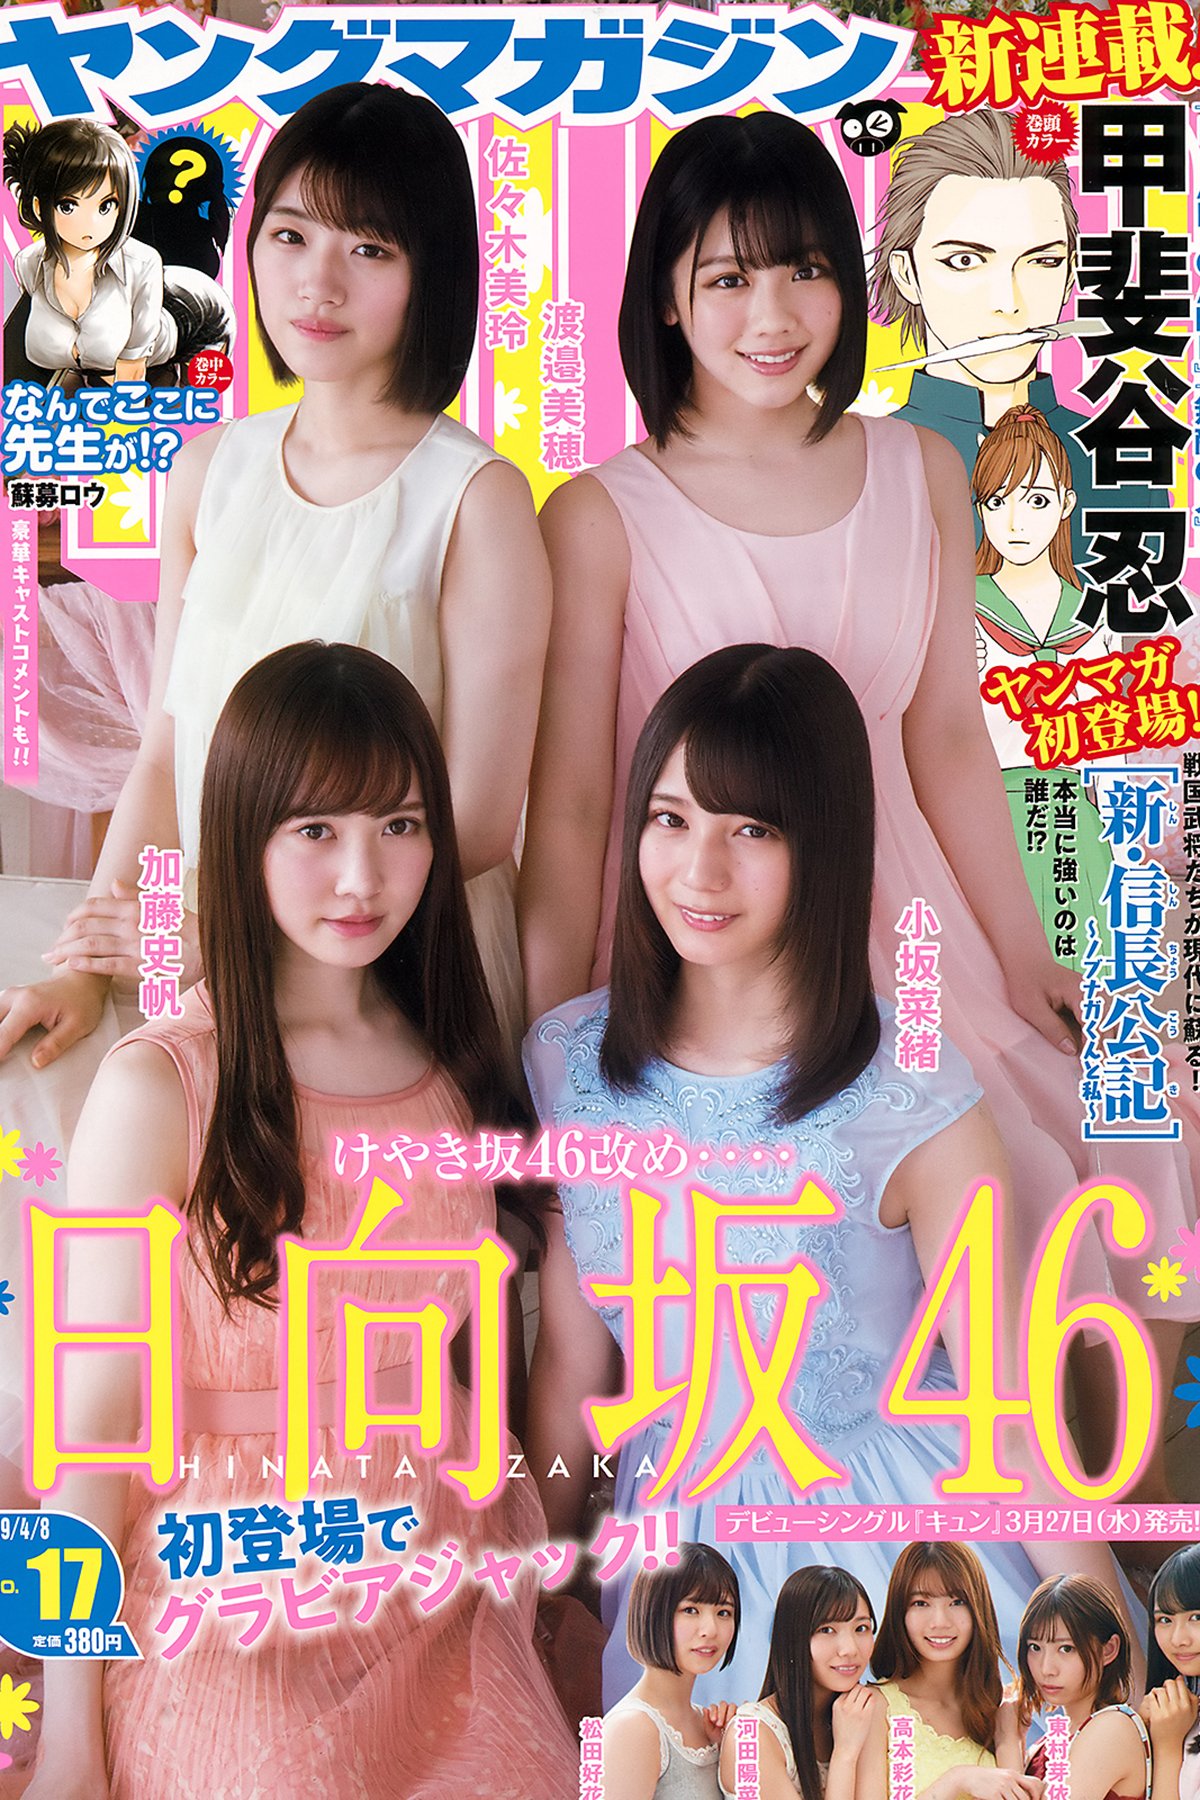 Young Magazine 2019 No.17 Hinata Zaka 46 日向坂46